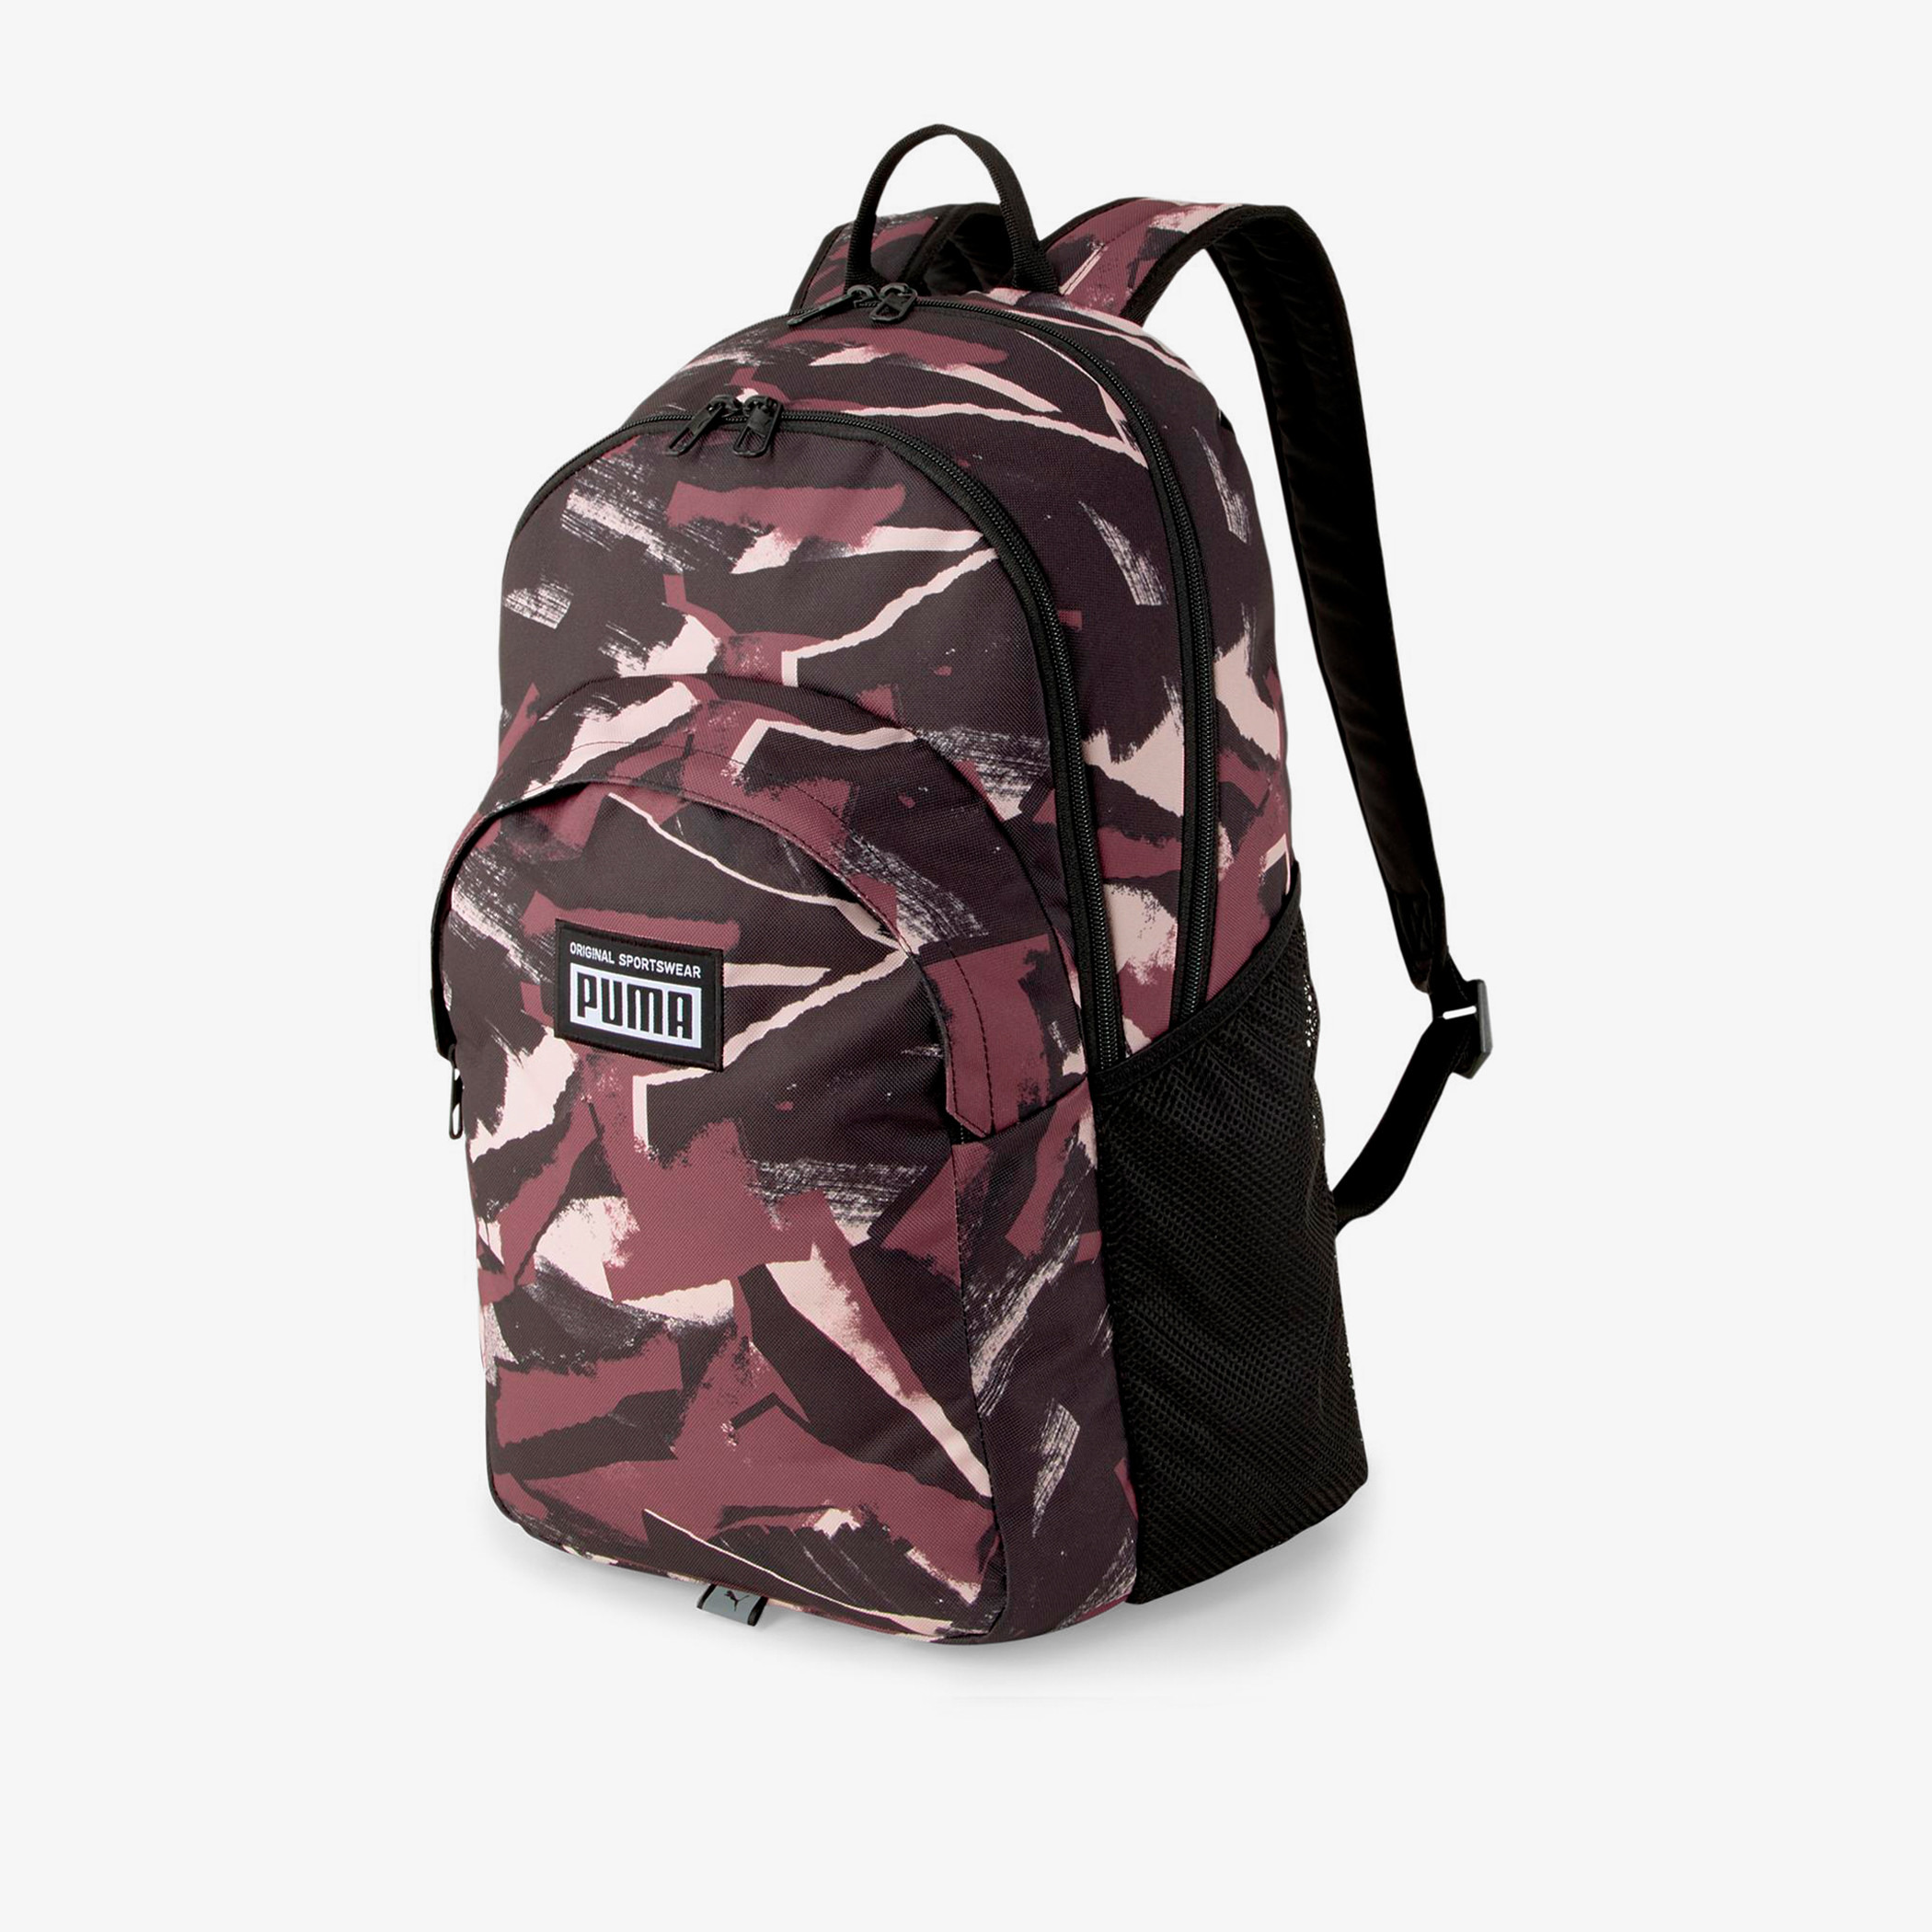 Custom Puma Bags | Shop Personalized Puma Bags Online